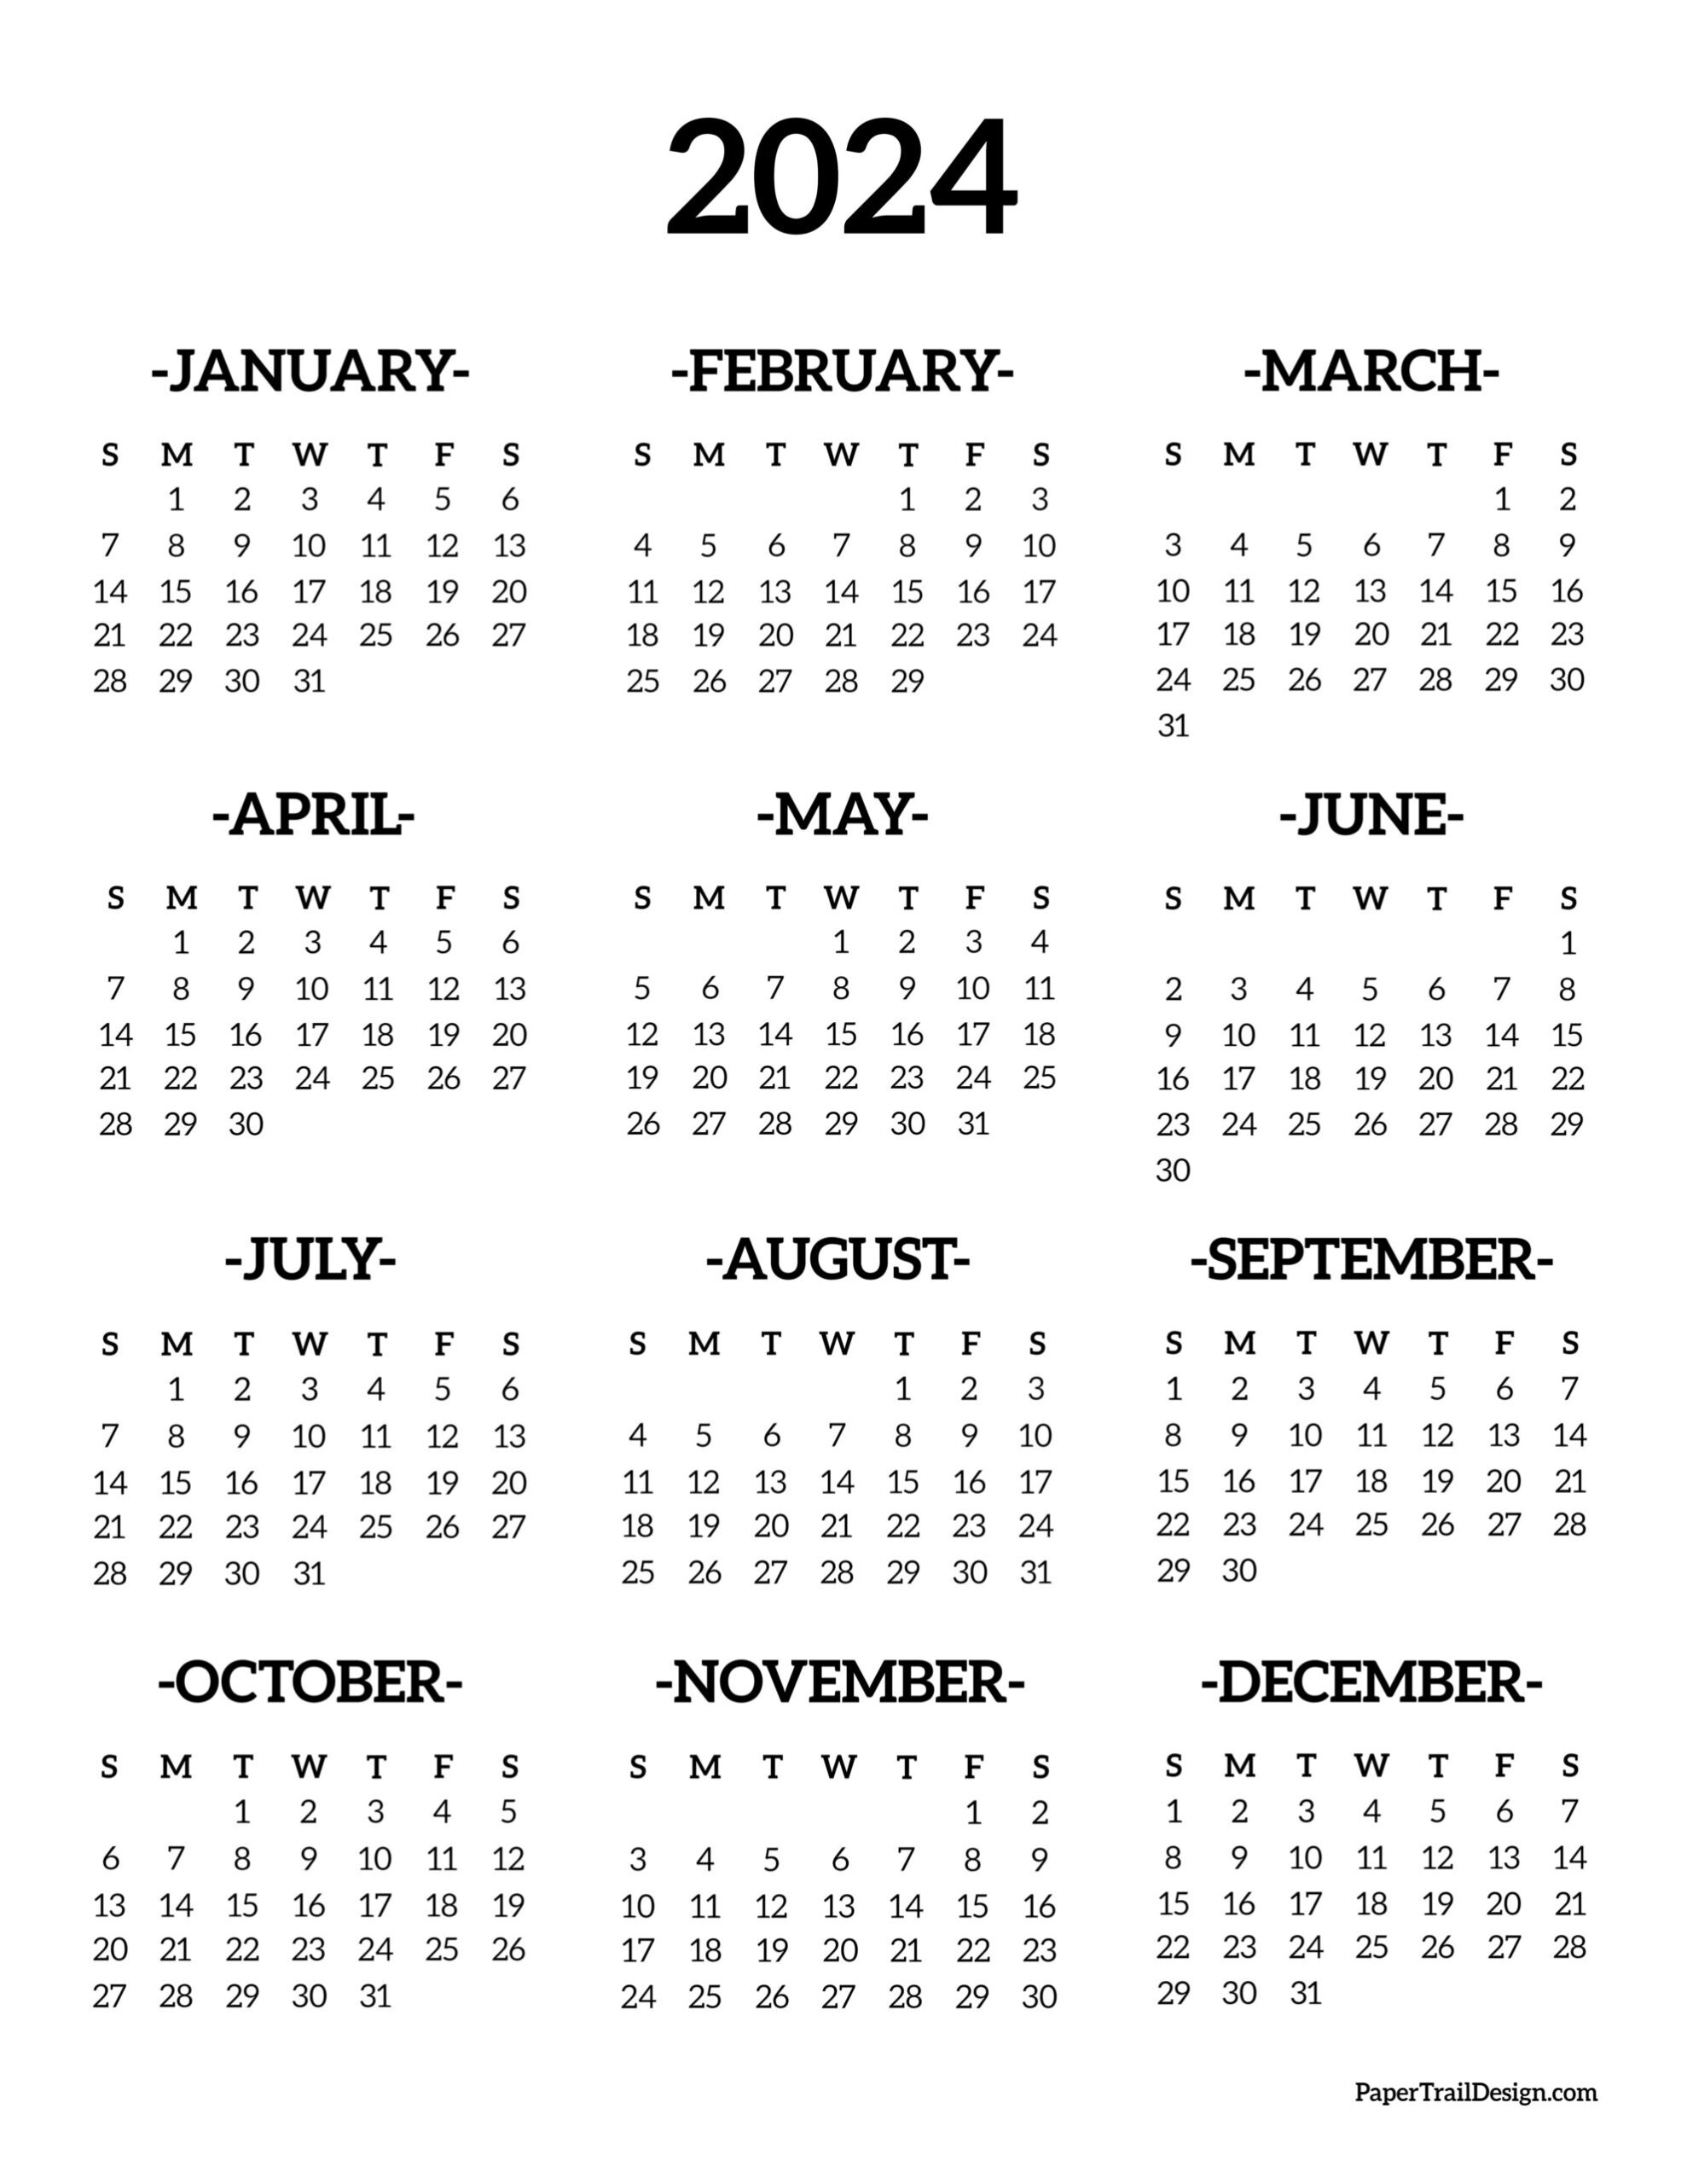 Calendar 2024 Printable One Page - Paper Trail Design | Free Printable Calendar 2024 Year